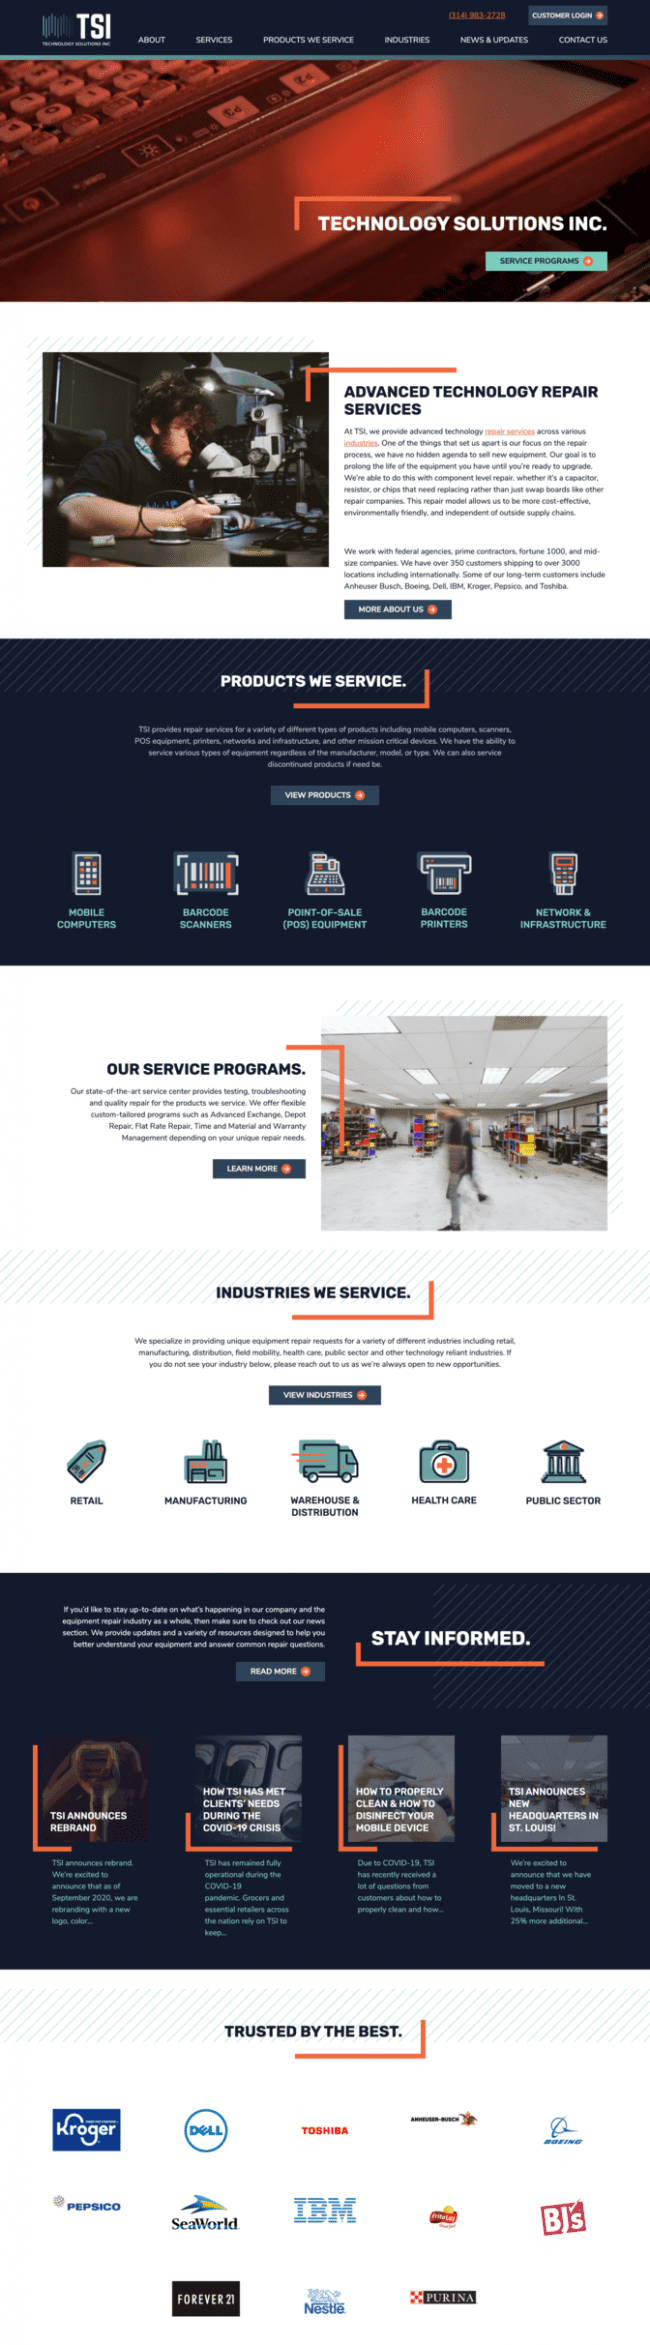 Technology Solutions Inc. homepage screenshot